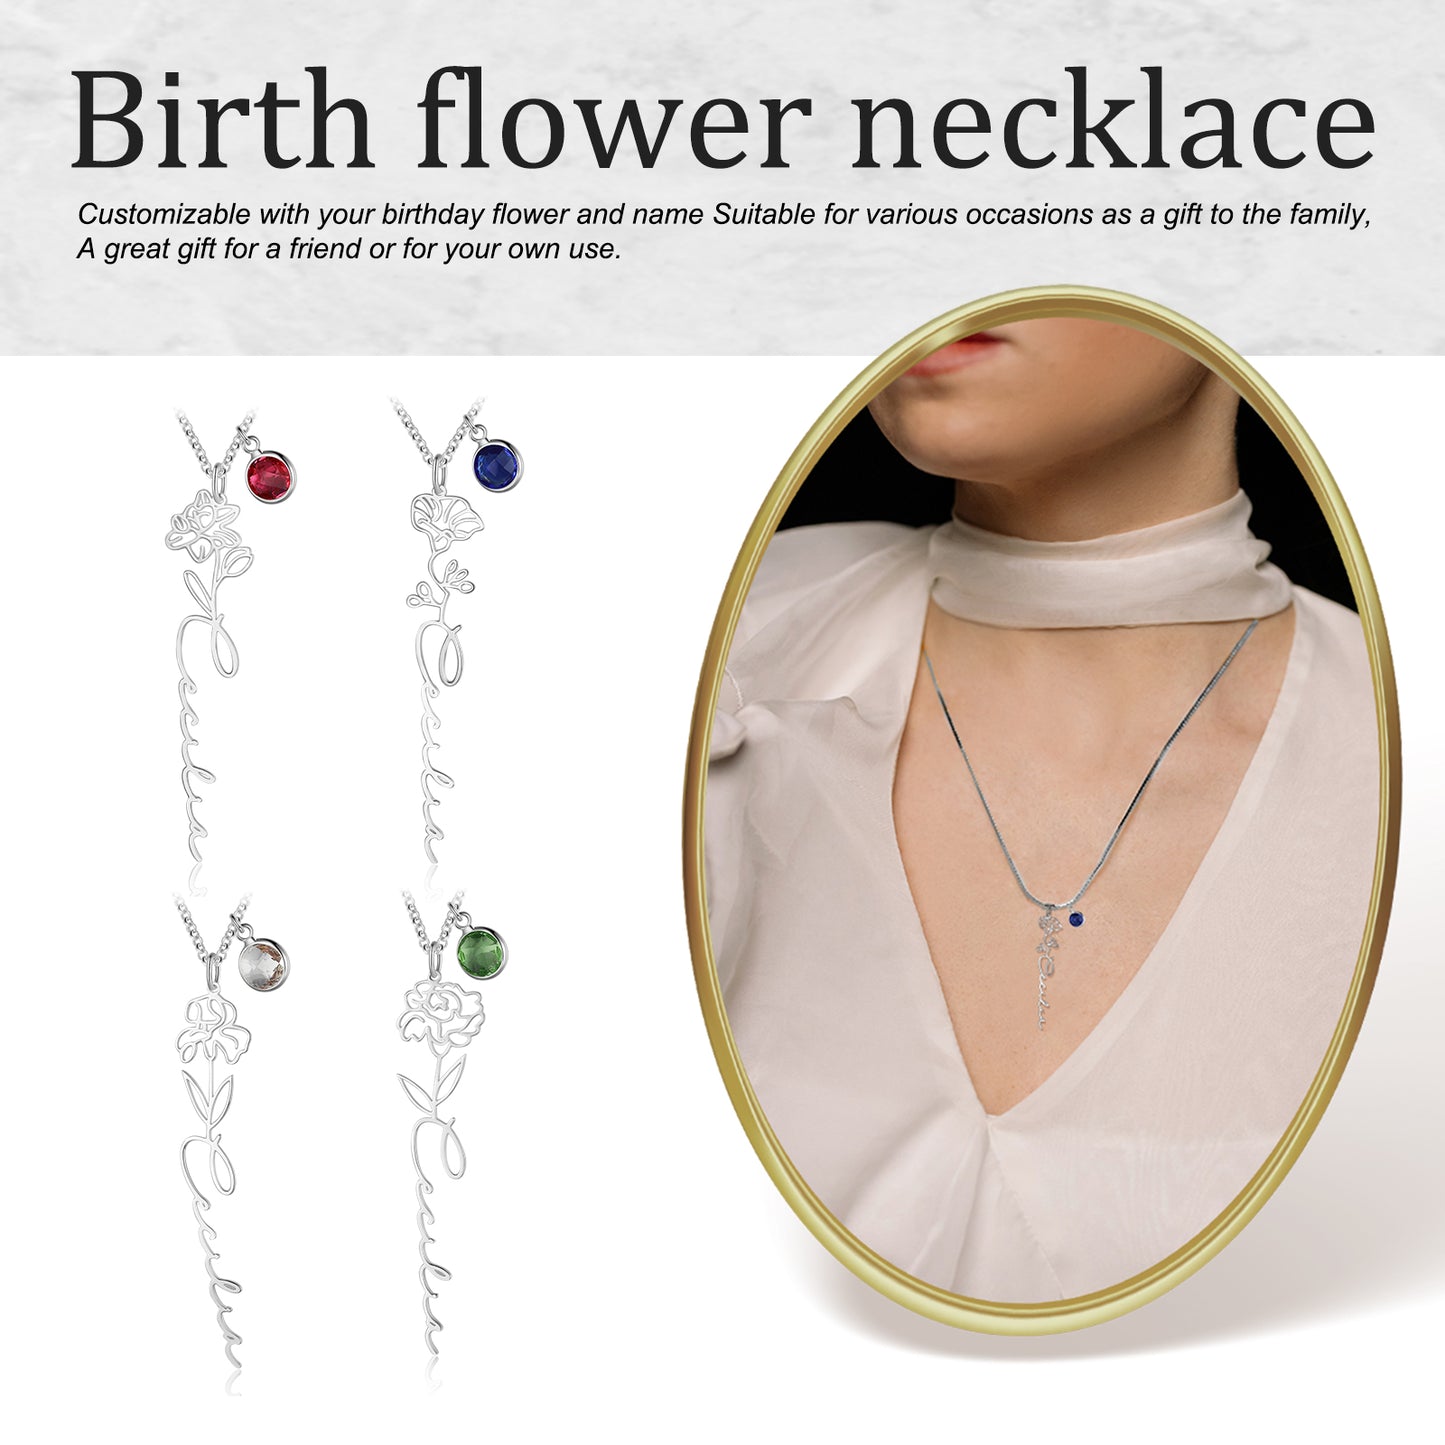 Custom Name Birthflower Necklace